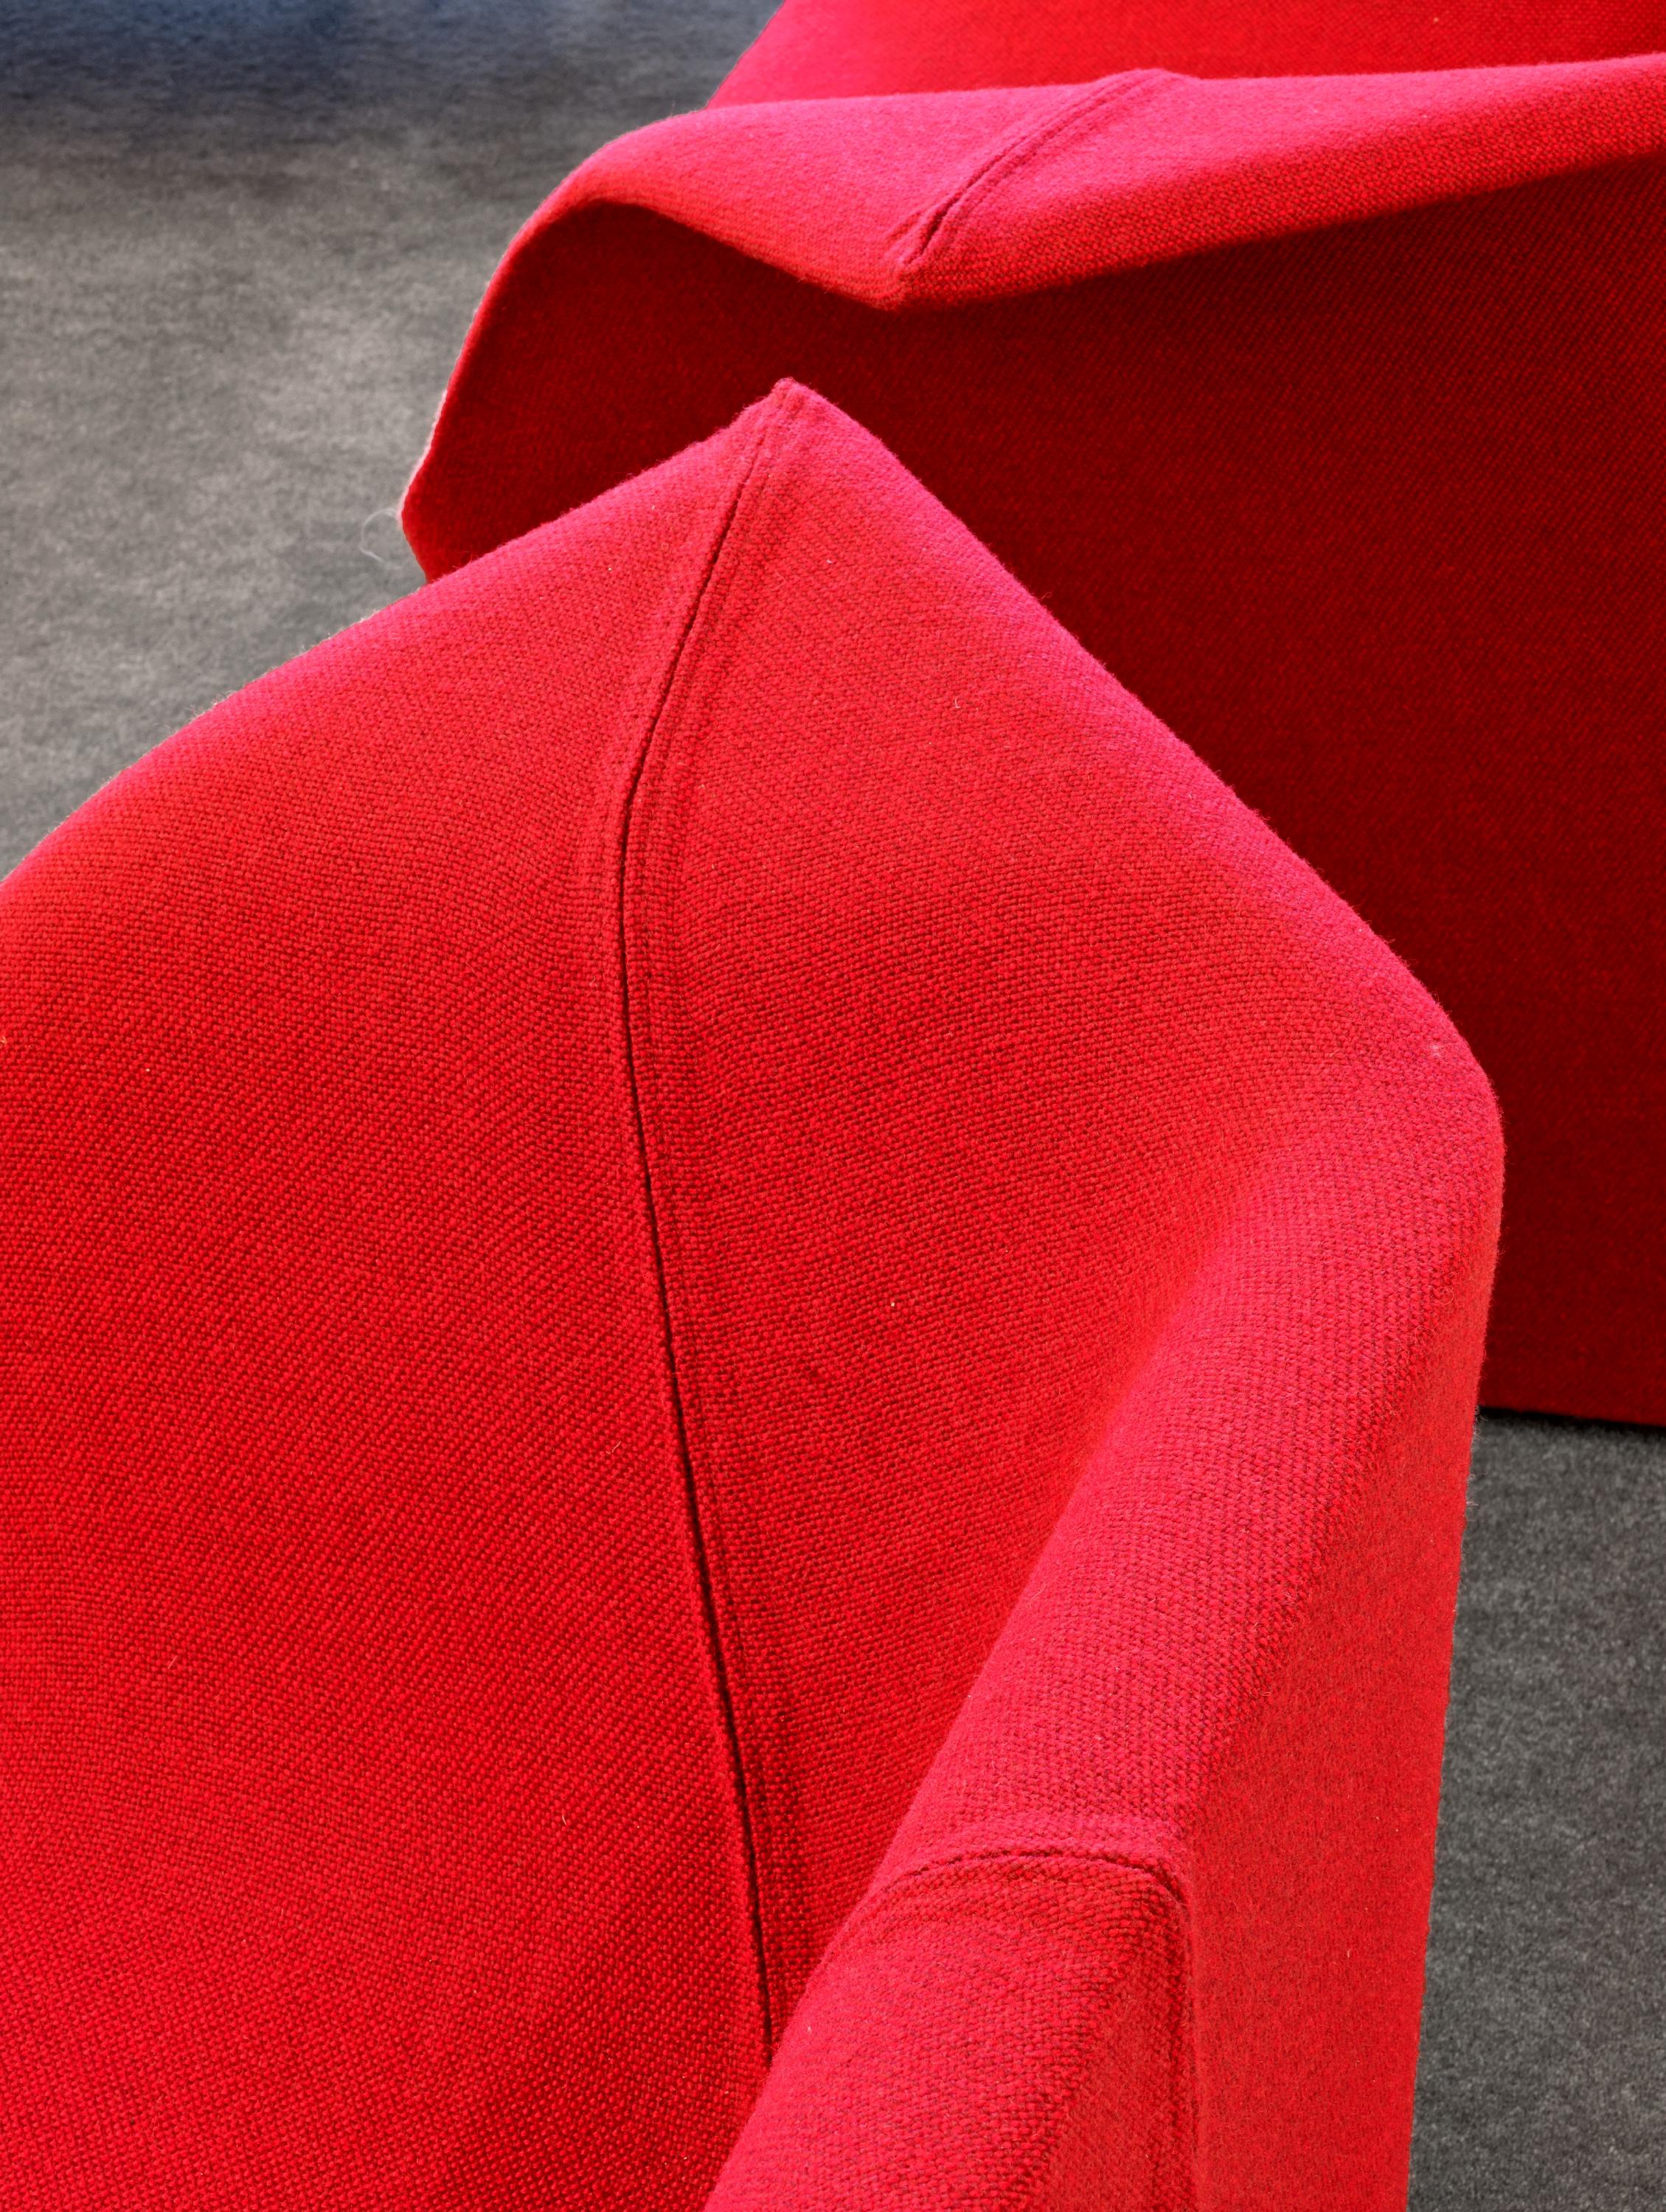 Metal Benjamin Hubert Garment Armchair in Fabric or Leather Upholstery for Cappellini